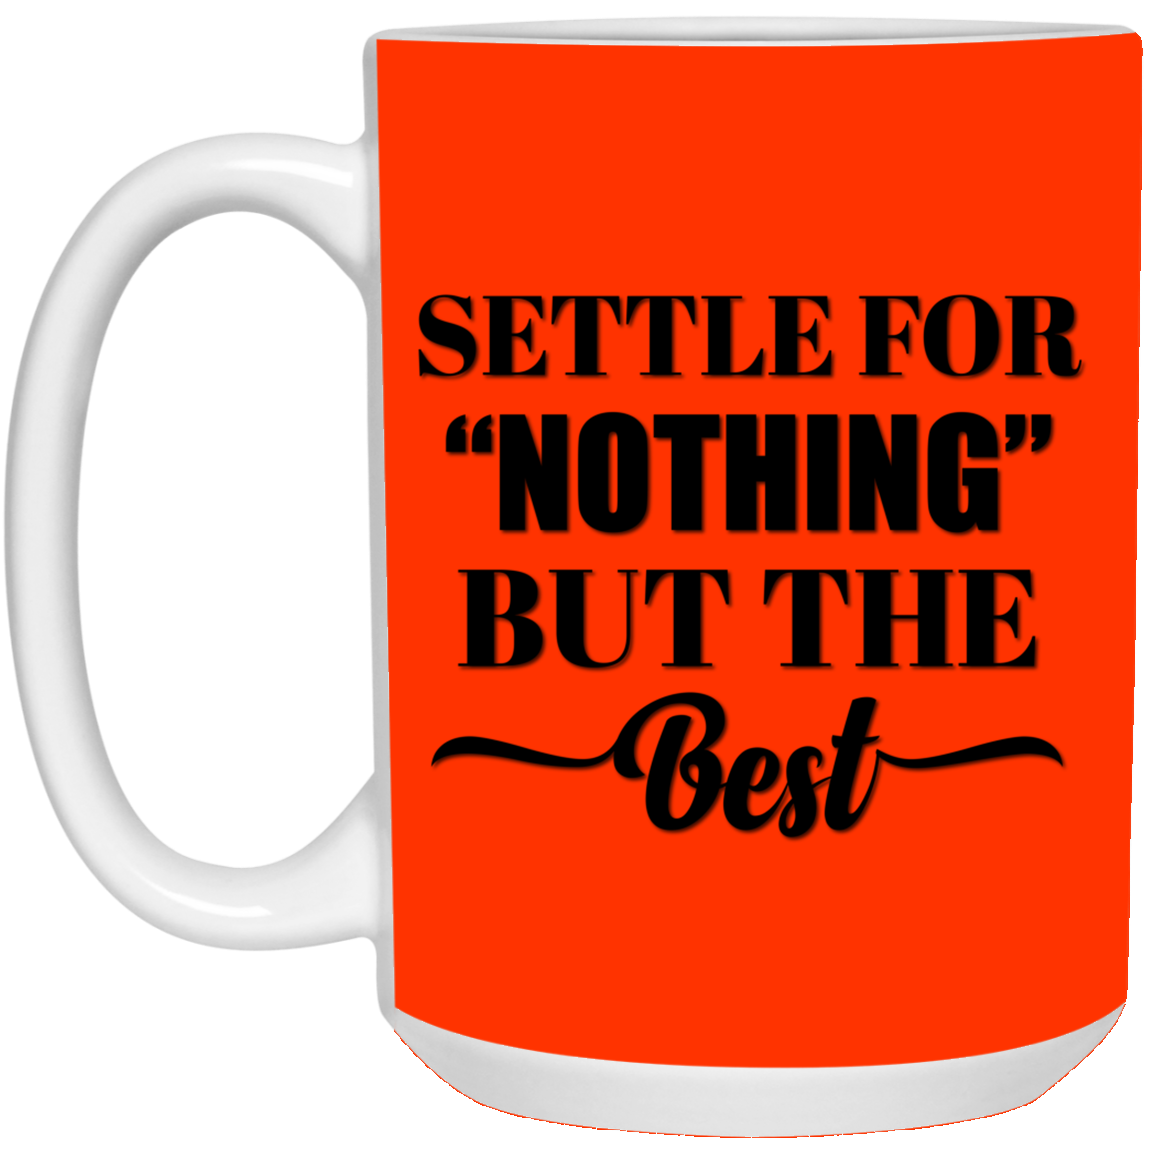 SETTLE FOR "NOTHING" BUT THE BEST  15 oz. White Mug